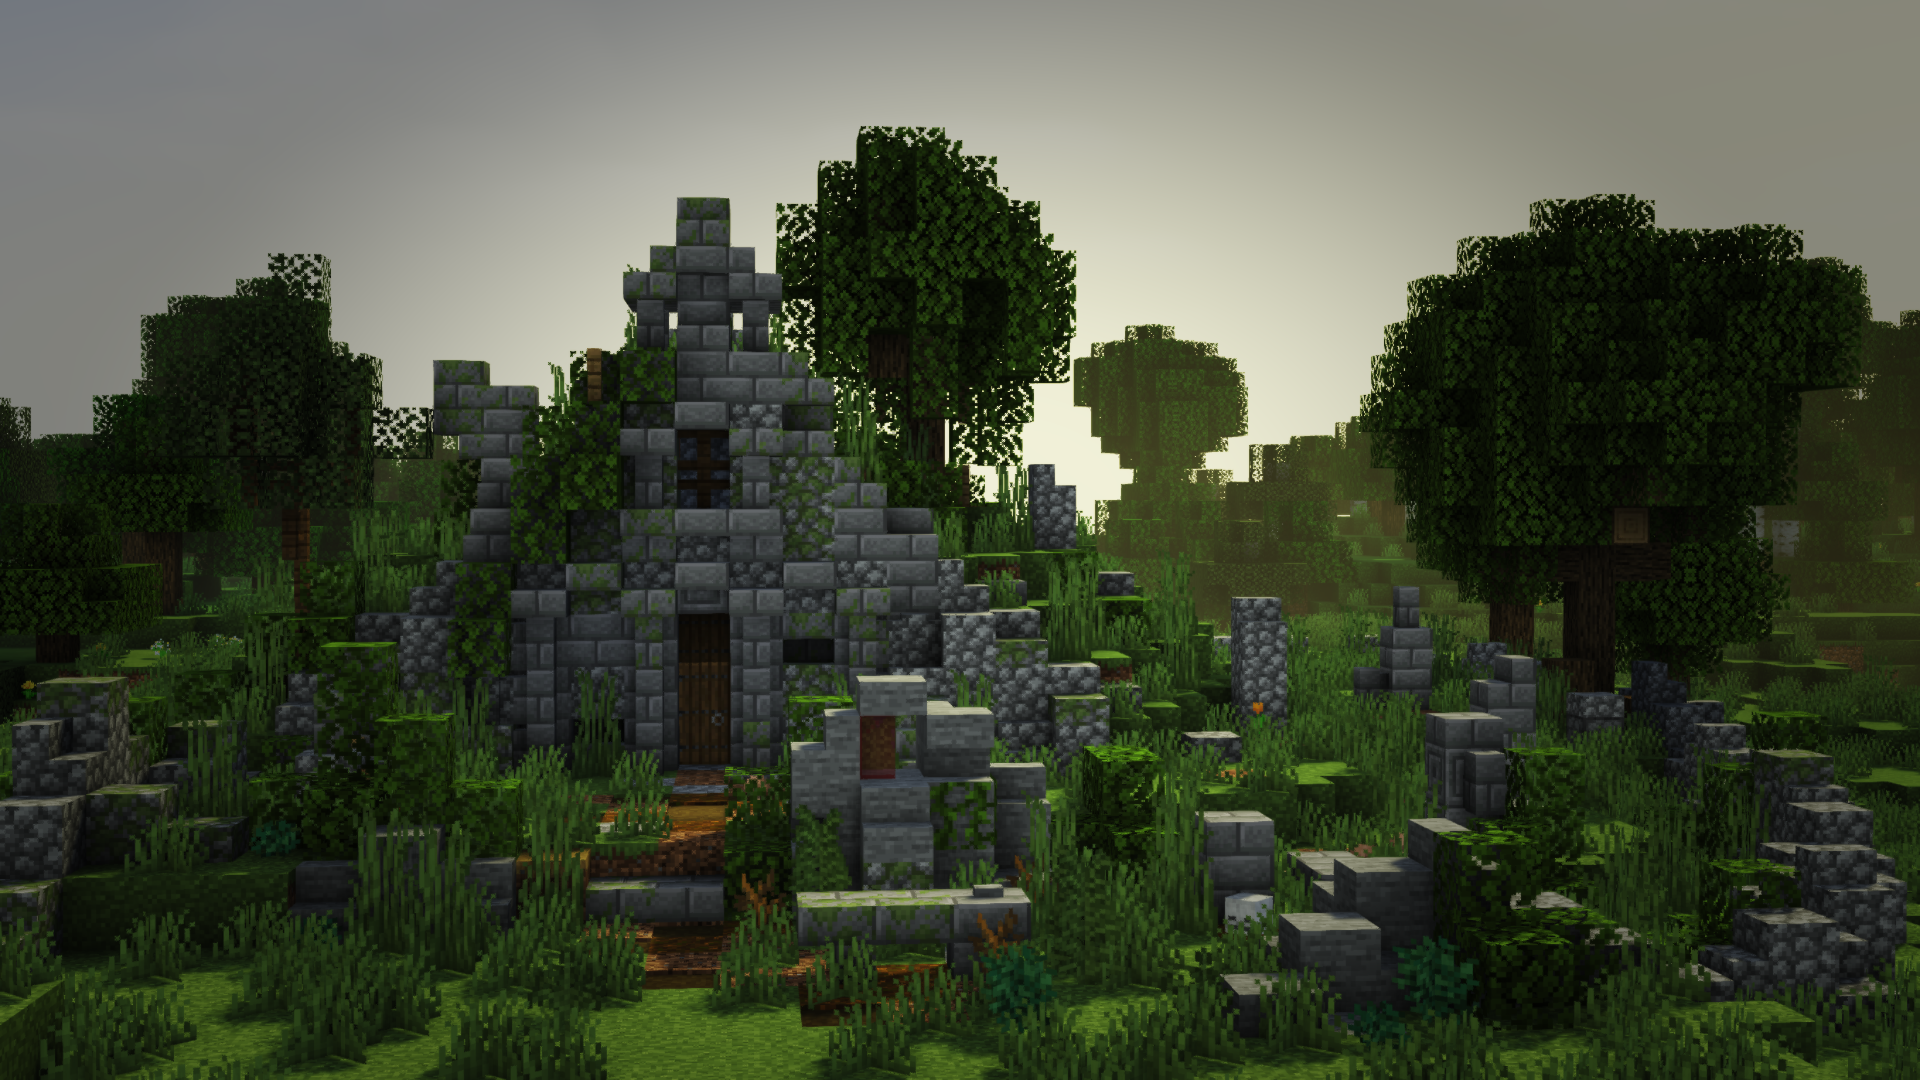 I've built a Witcher 3 inspired Graveyard!